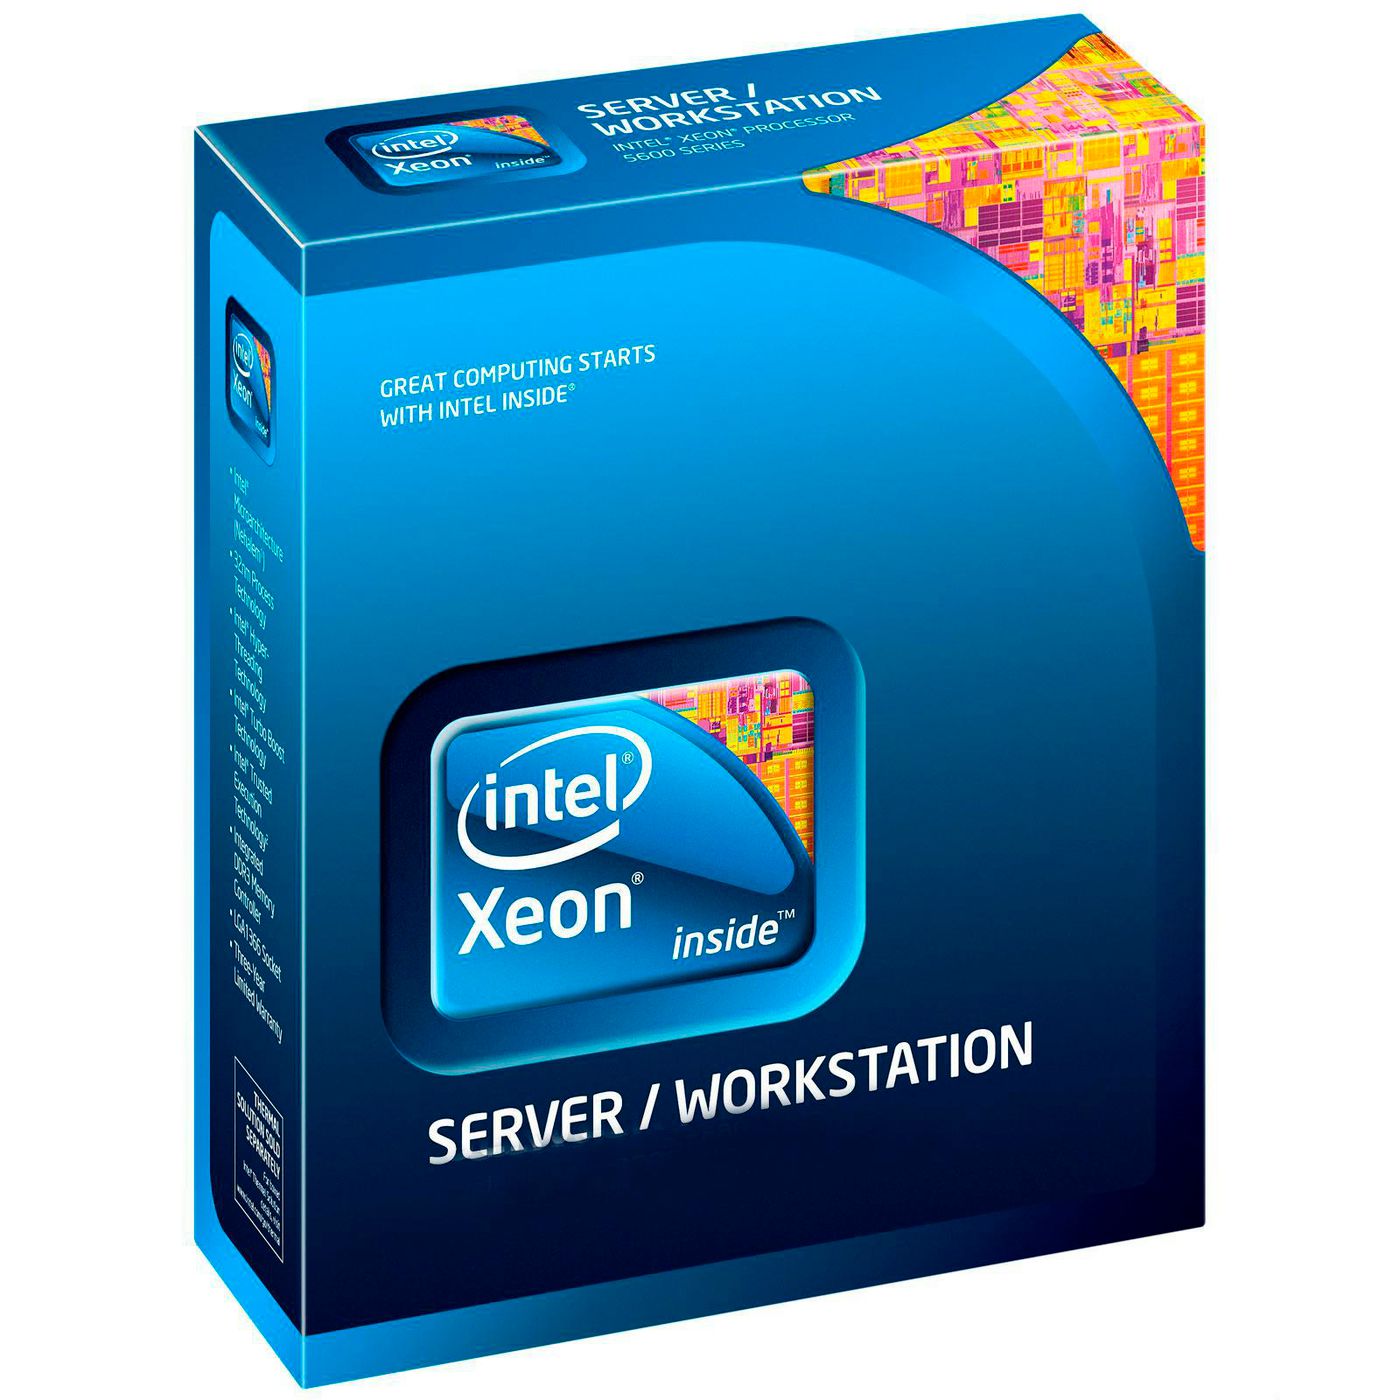 Intel BX80614X5650-RFB XEON 2.66GHZ 6C 12MB PROCESSOR 